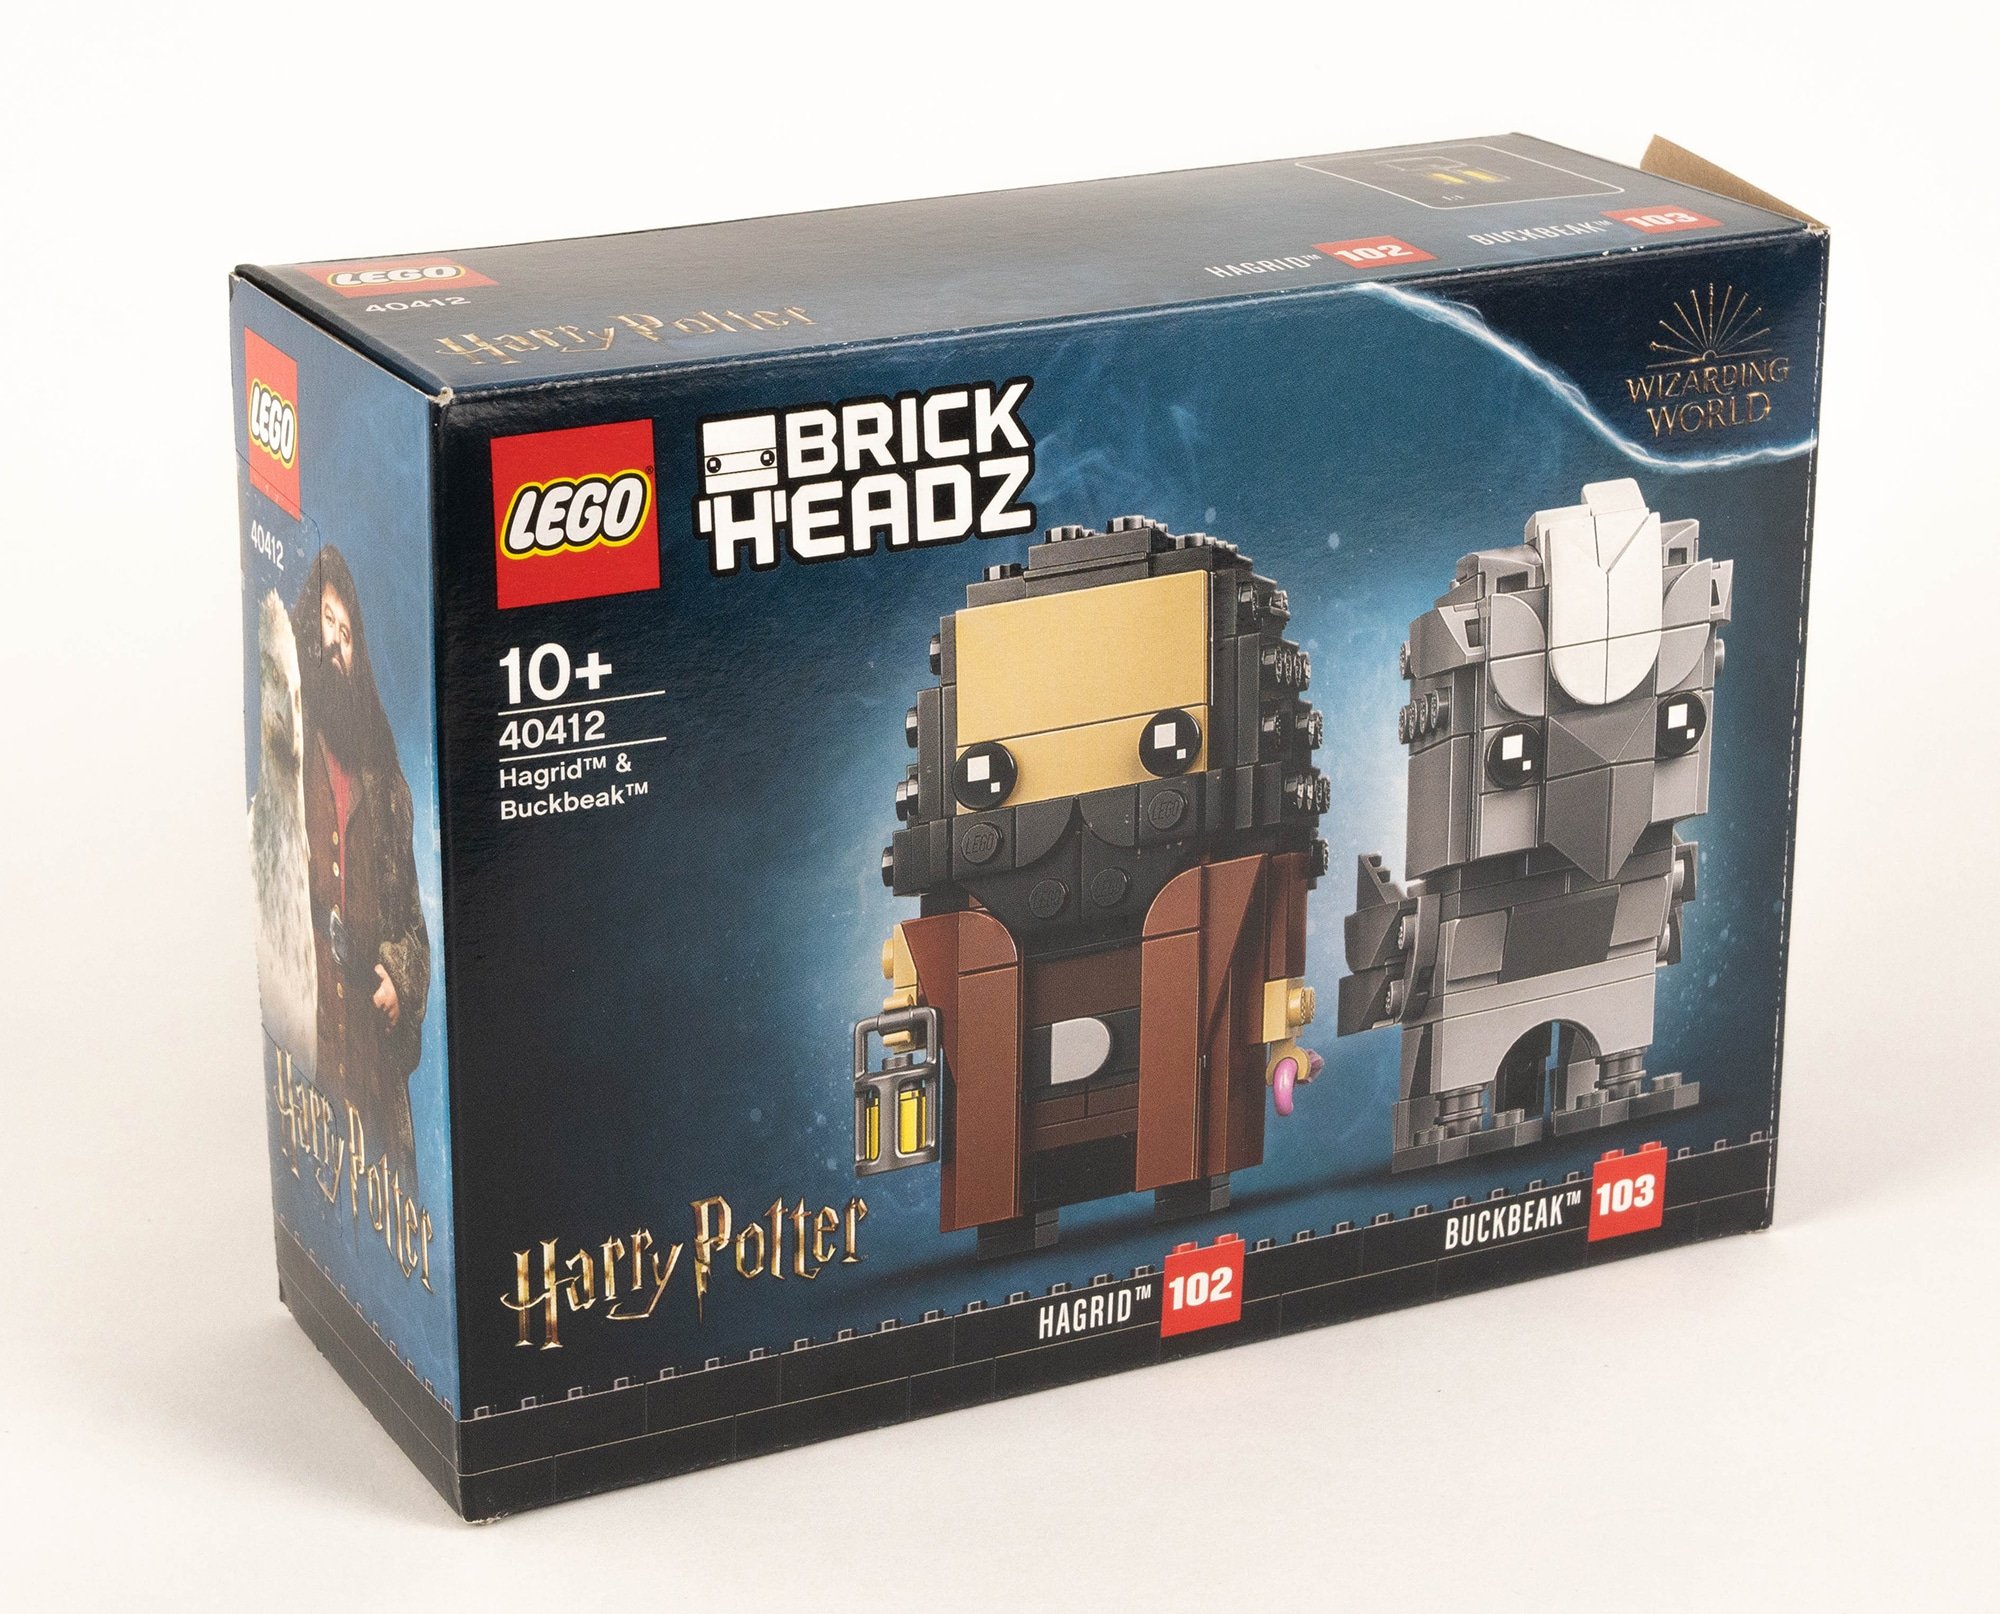 LEGO 40412 Hagrid Seidenschnabel Brickheadz Review 1